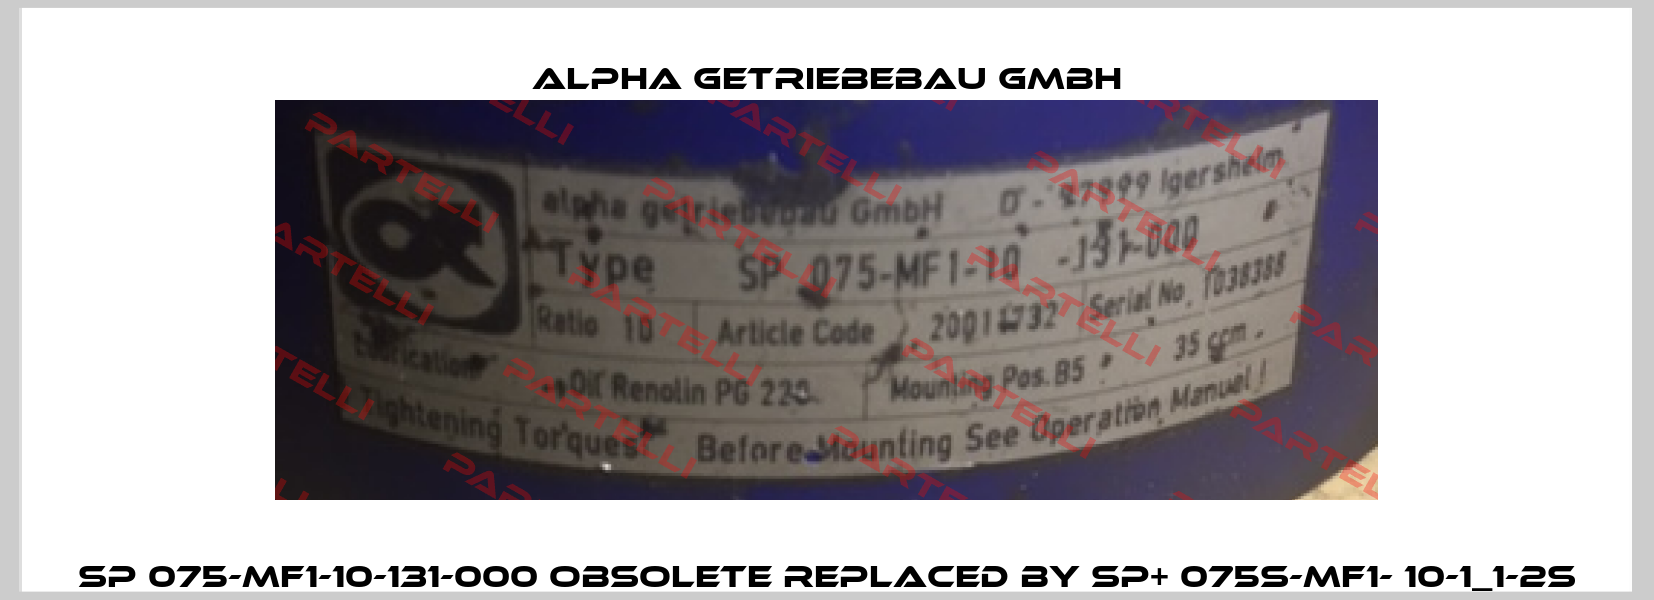 SP 075-MF1-10-131-000 obsolete replaced by SP+ 075S-MF1- 10-1_1-2S Alpha Getriebebau GmbH